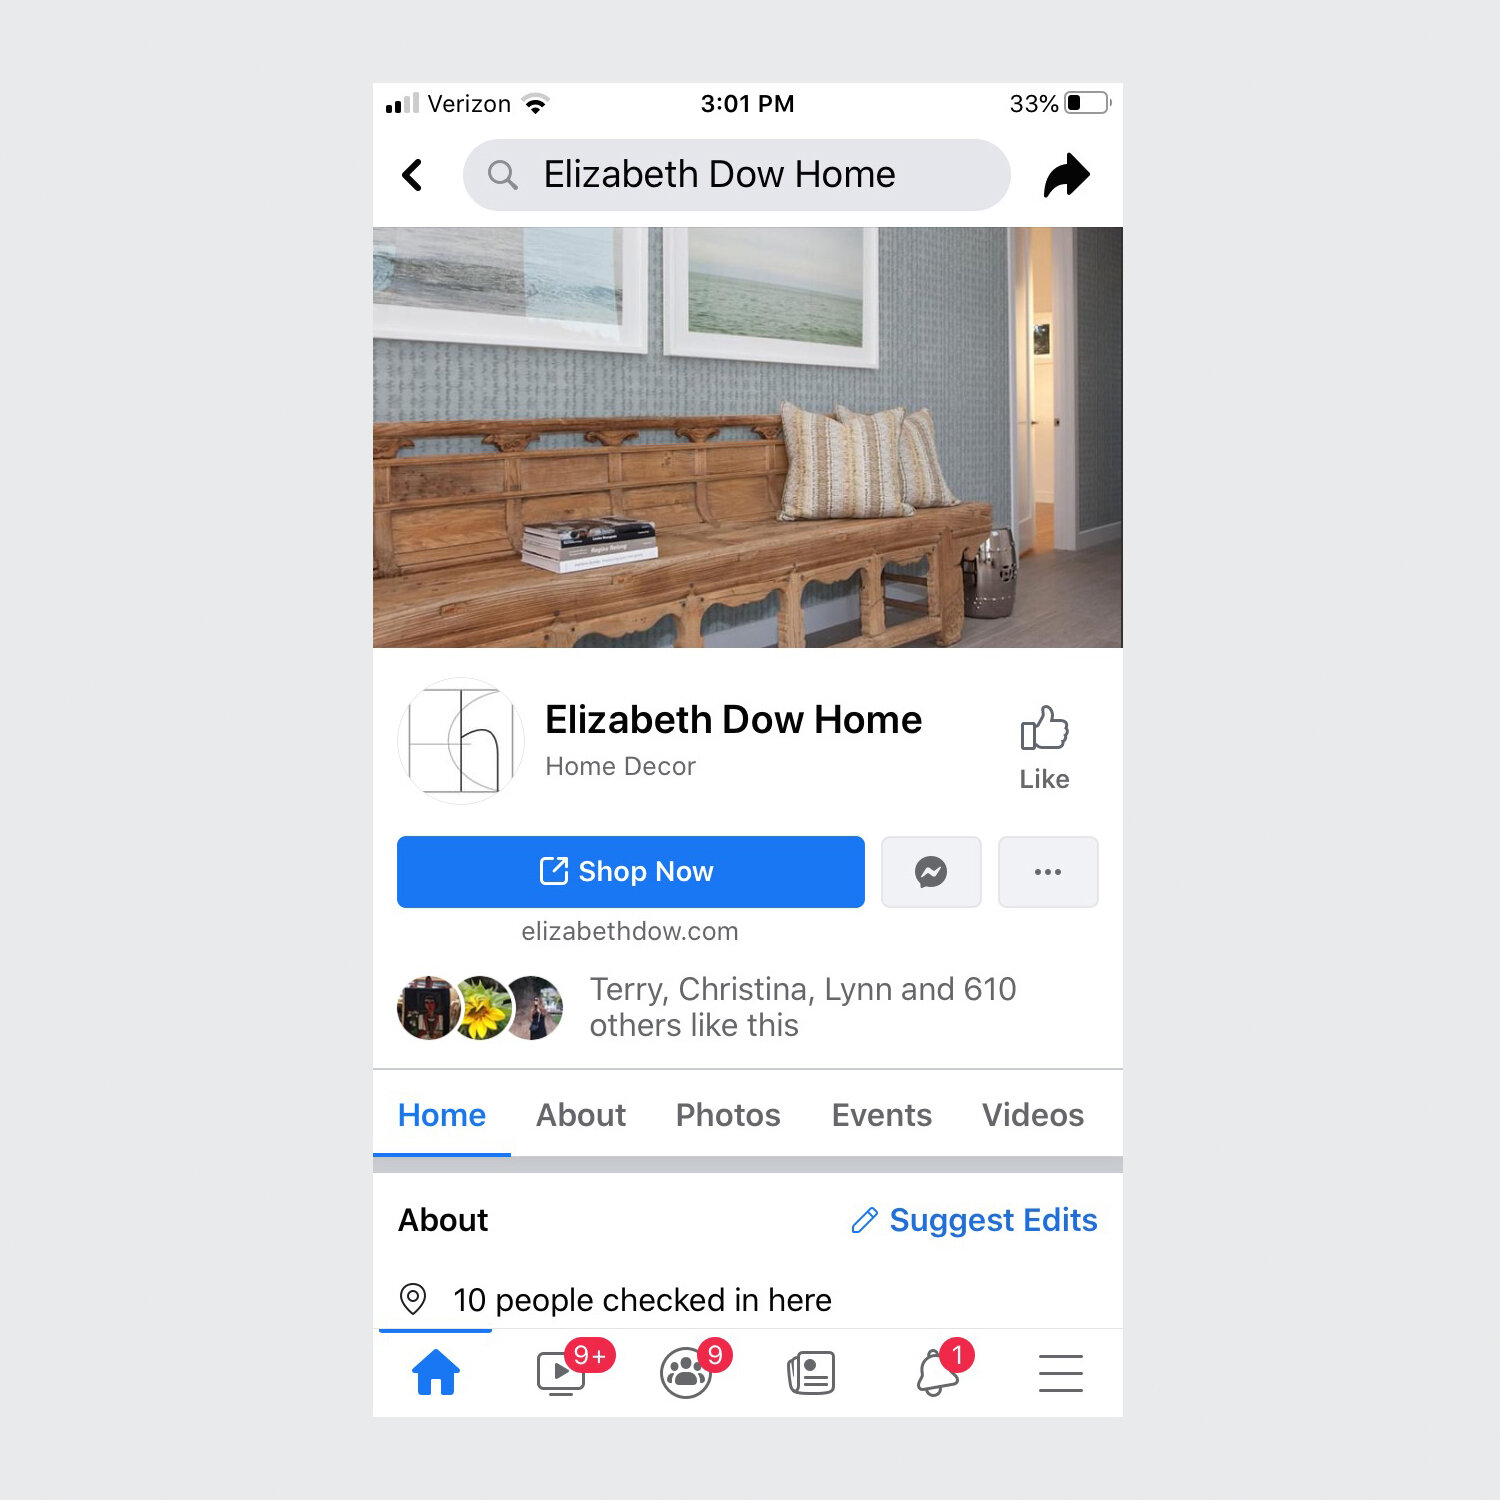  ELIZABETH DOW HOME FaceBook Brand Profile 